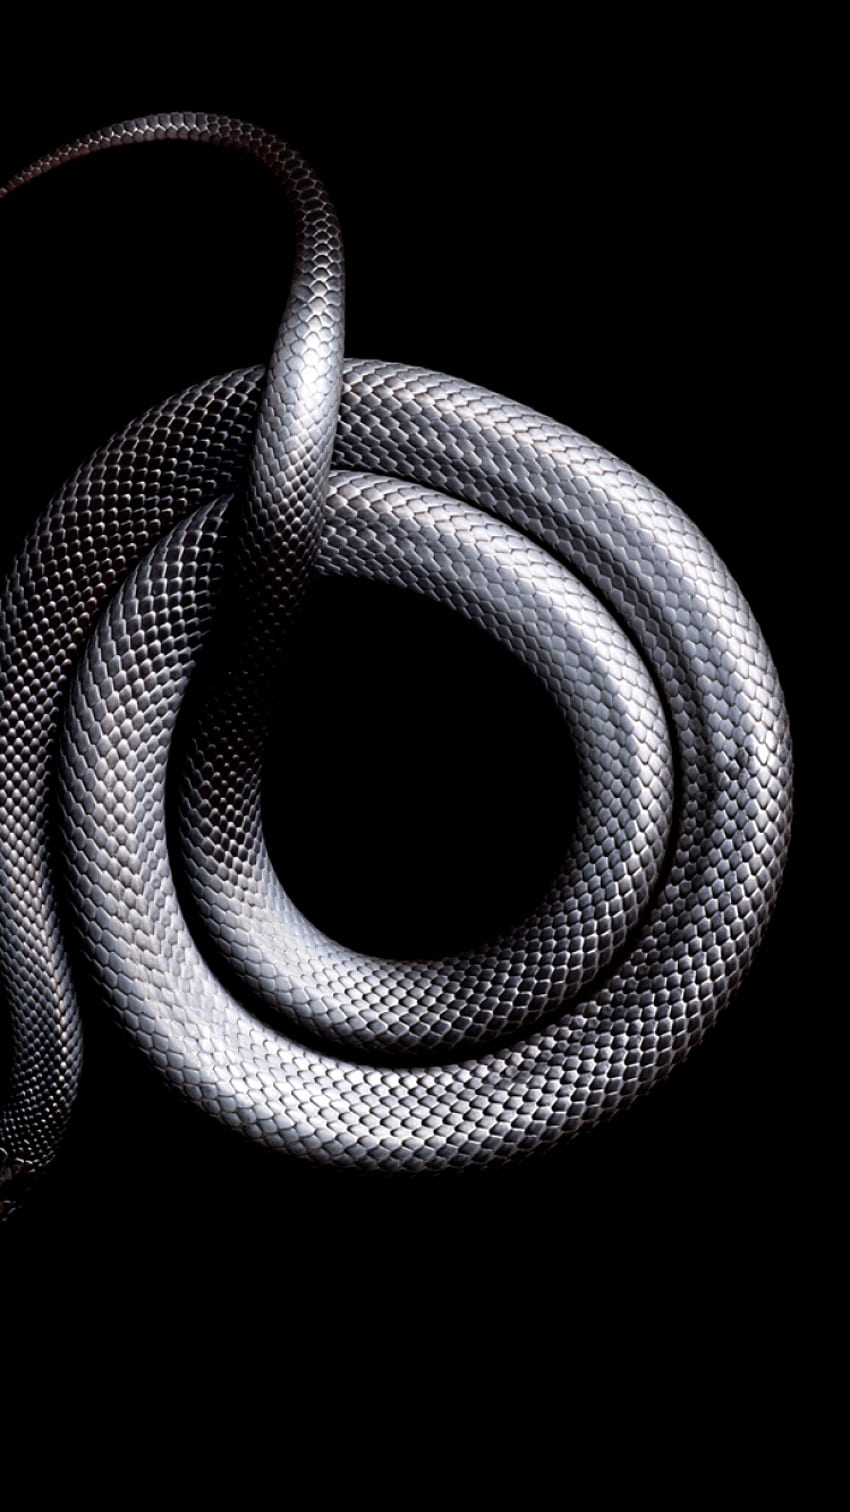 Red Bellied Black Snake HD Background Wallpaper 78285 - Baltana